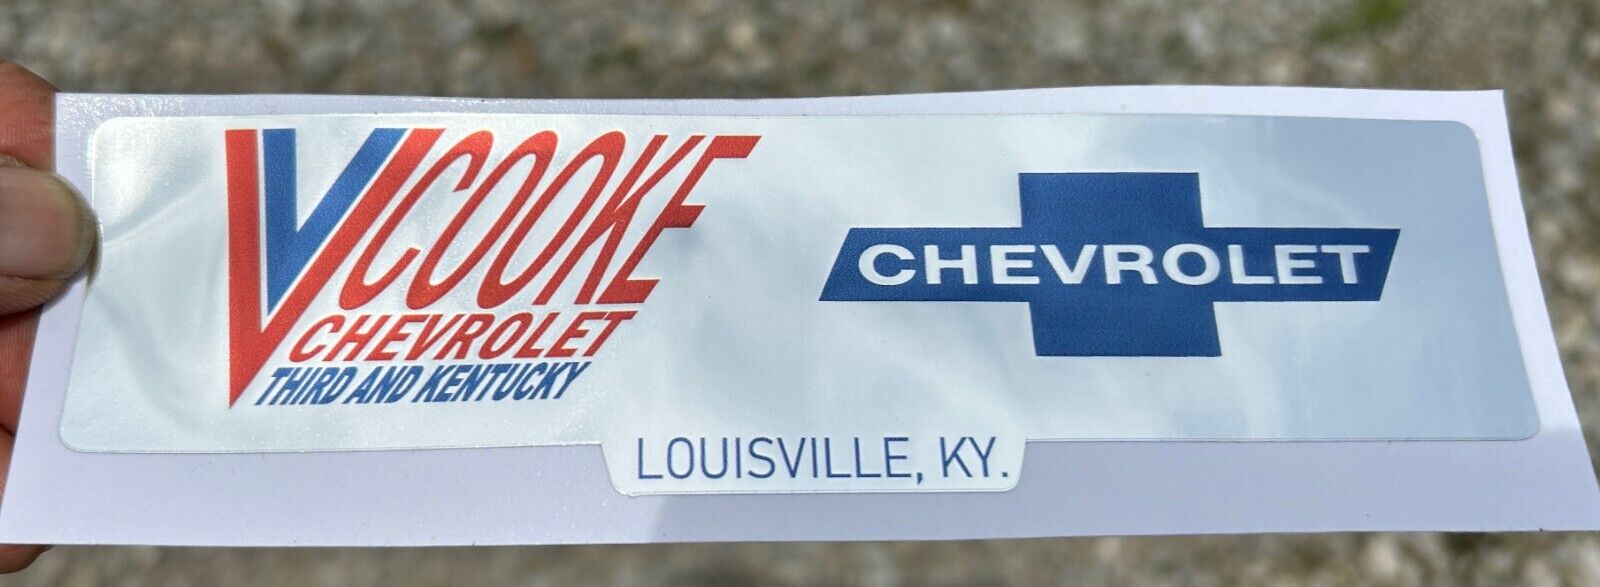 VV Cooke Vintage Chevrolet Dealership Decal Yenko Corvette Louisville Kentucky